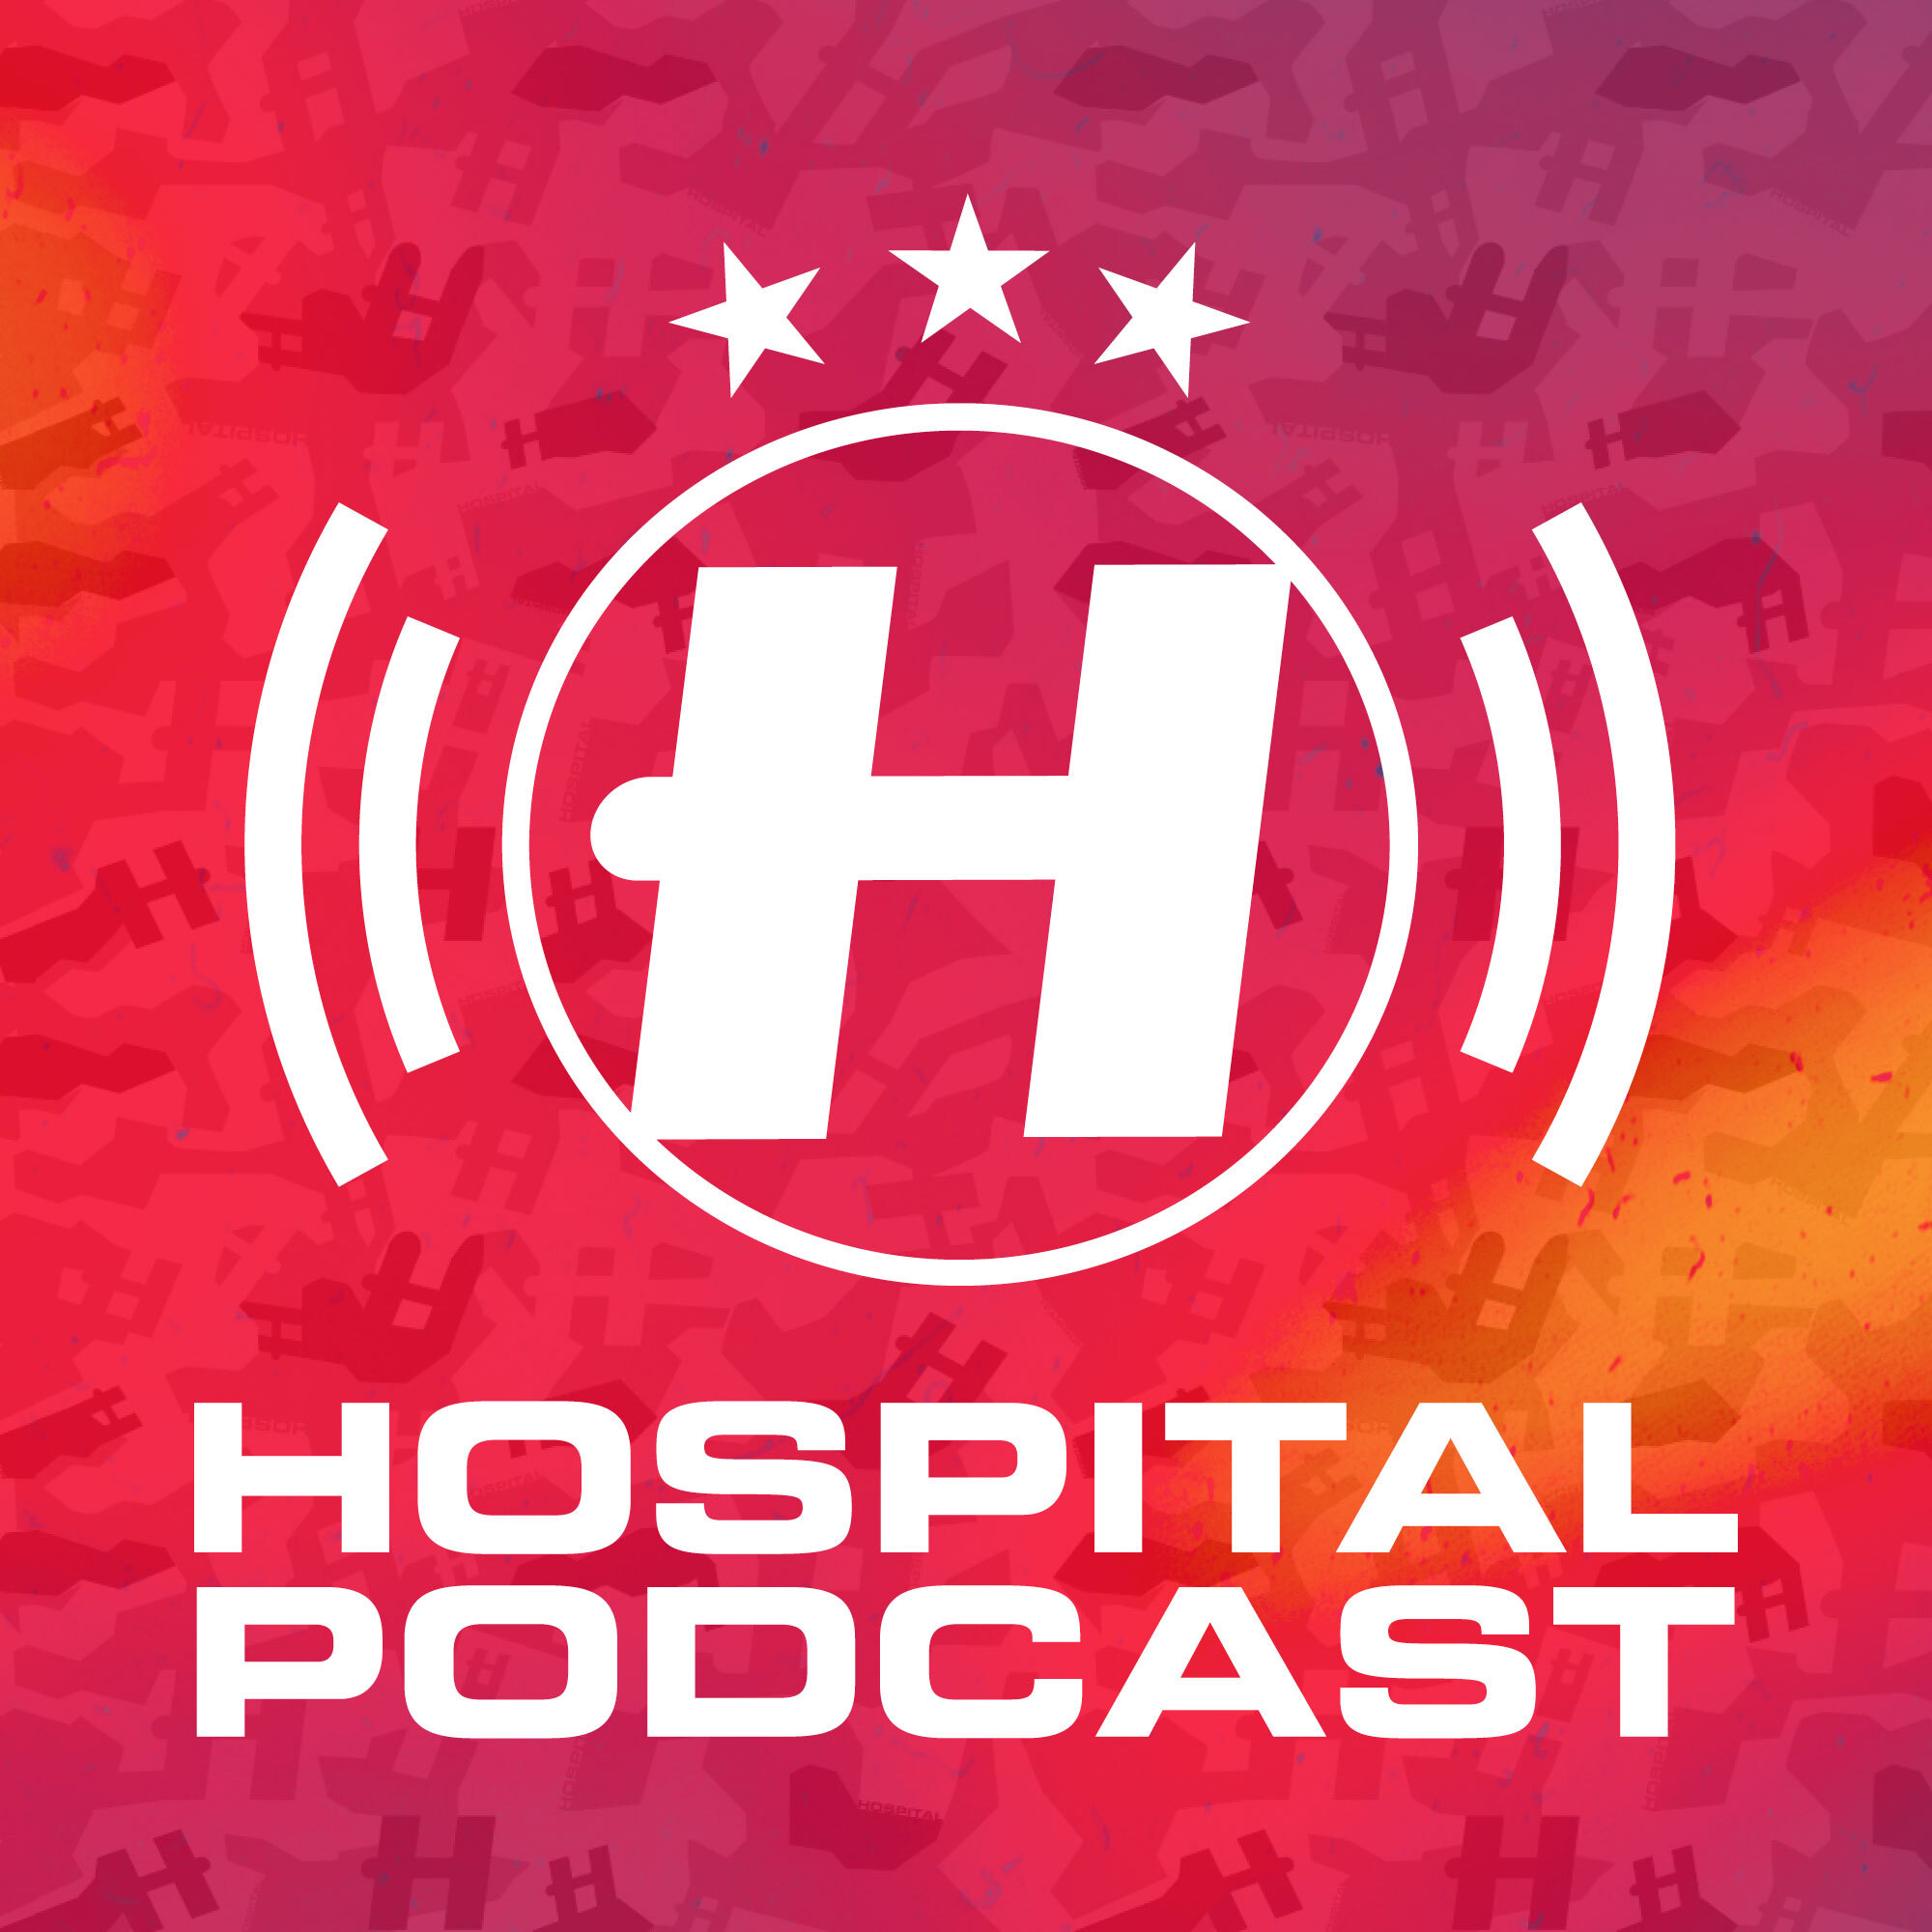 Hospital Podcast 393 with London Elektricity